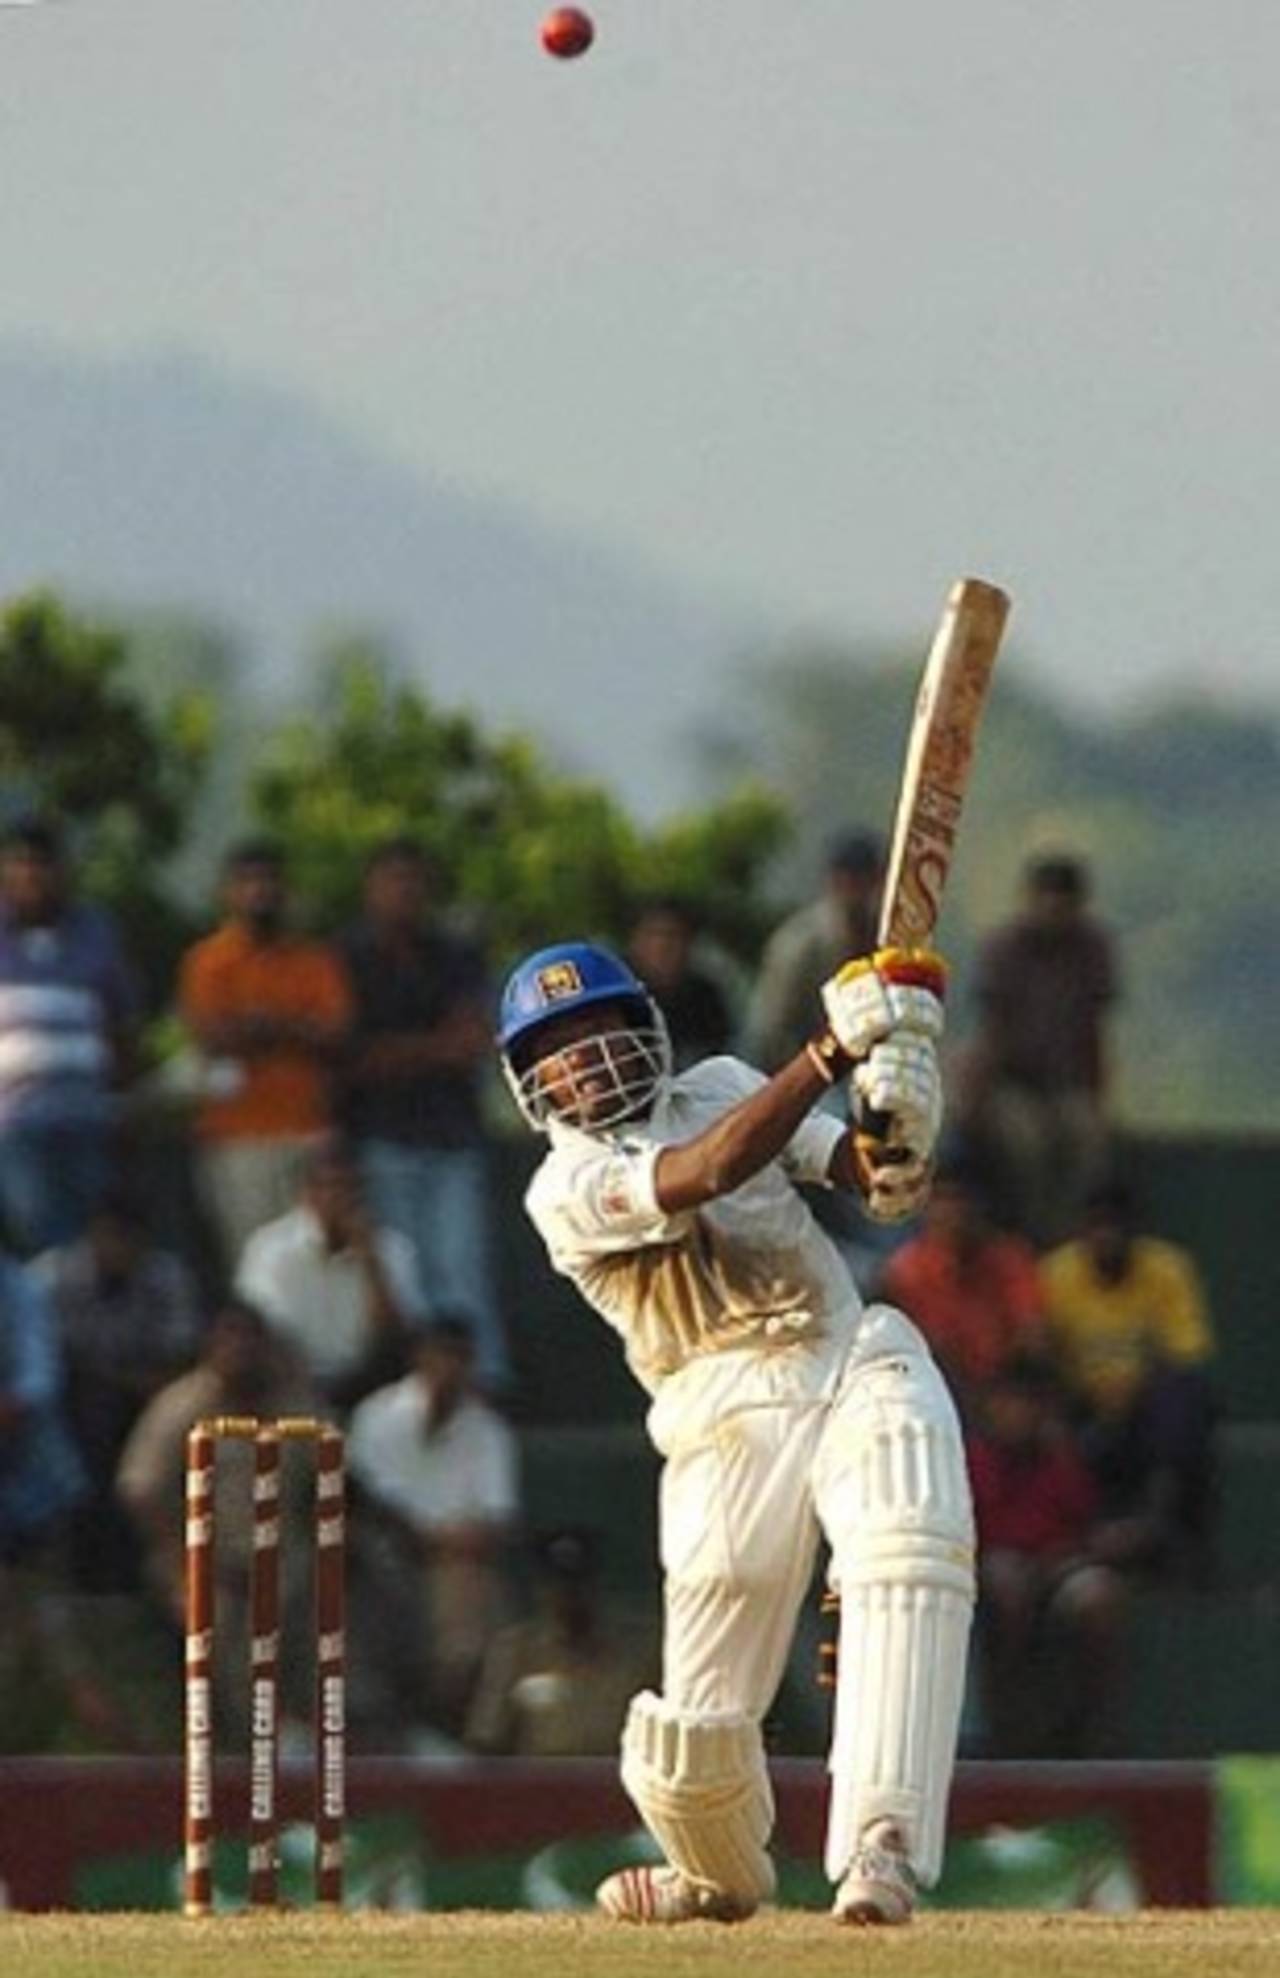 Malinga Bandara scored his maiden first-class century and picked up five wickets&nbsp;&nbsp;&bull;&nbsp;&nbsp;AFP